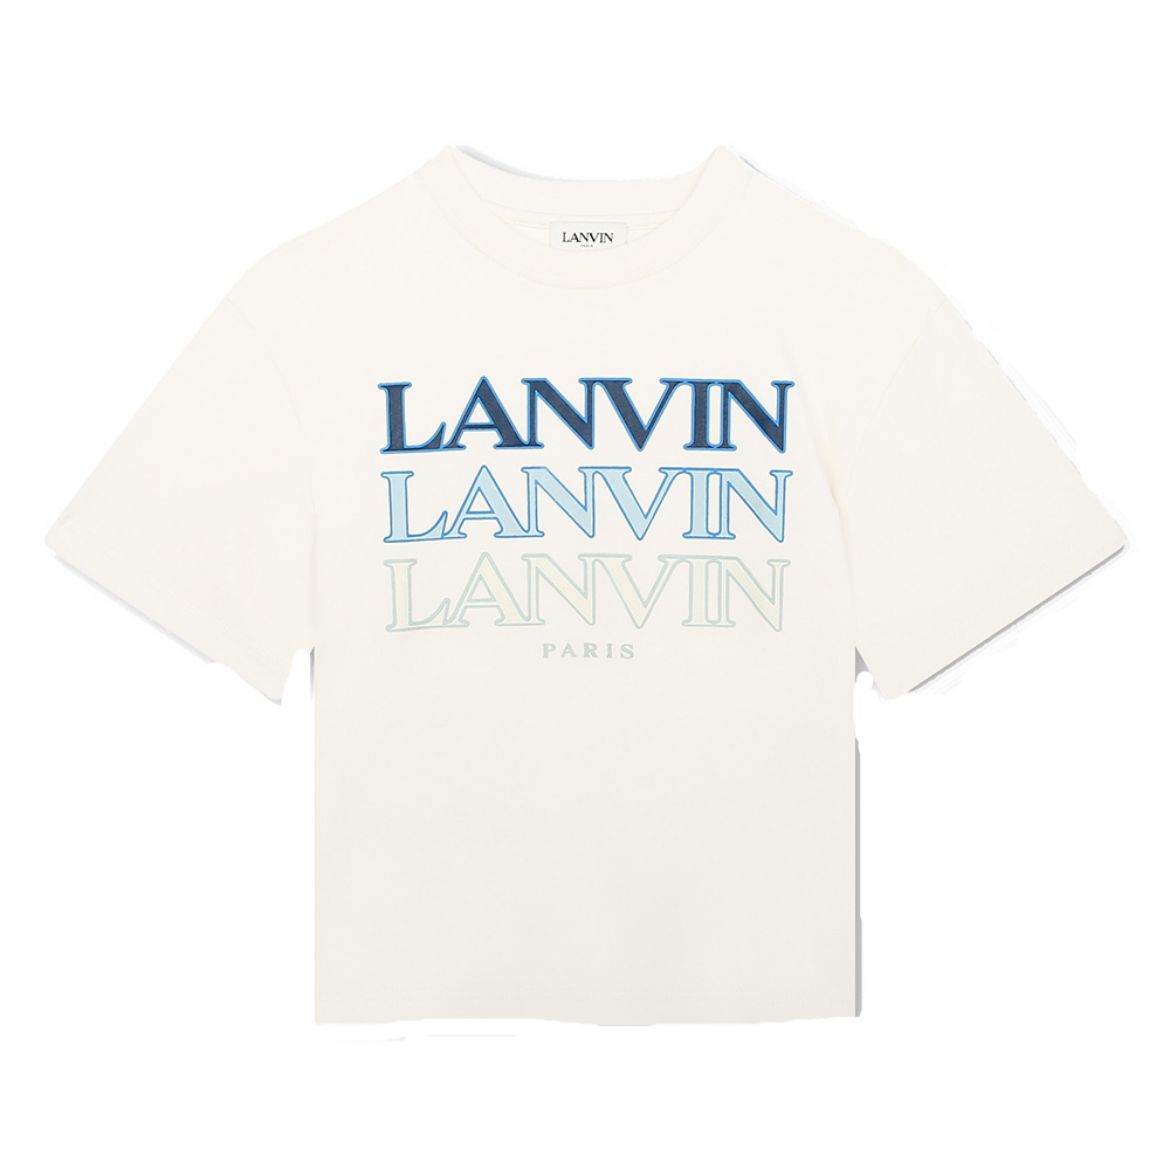 Picture of Lanvin Boys White Logo T-shirt